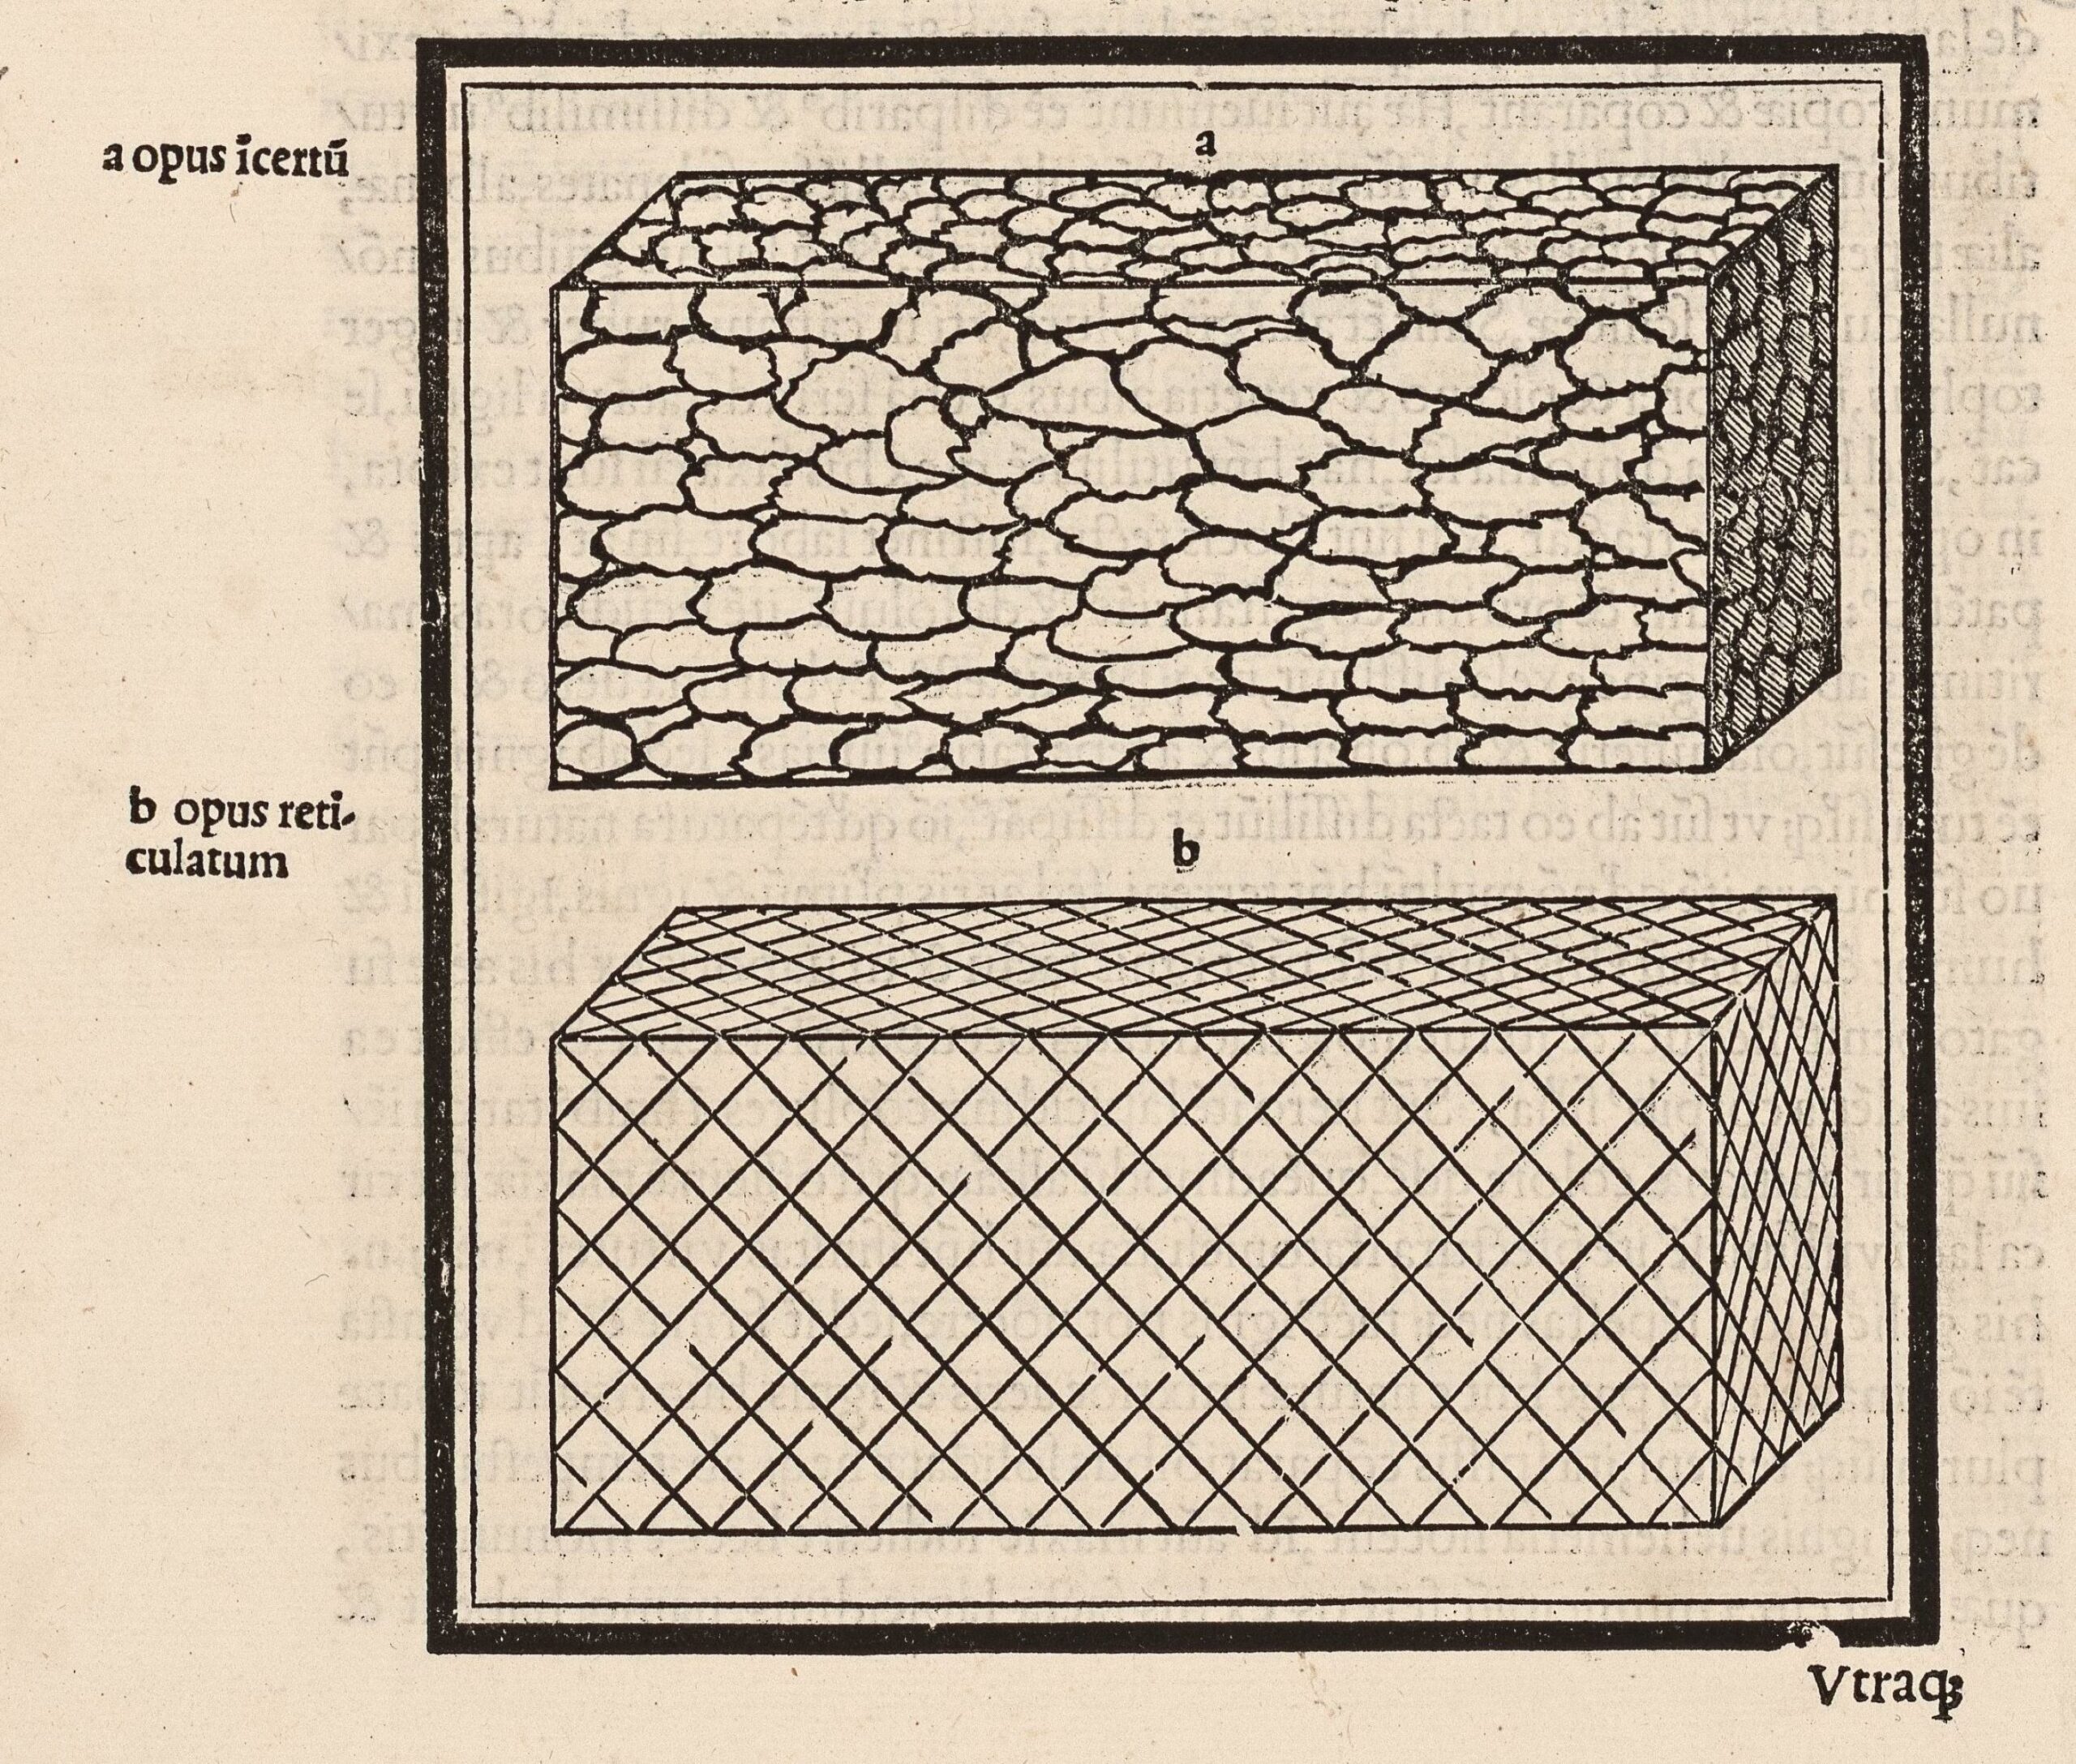 Vitruvius, De Architectura, 1511, 16r.